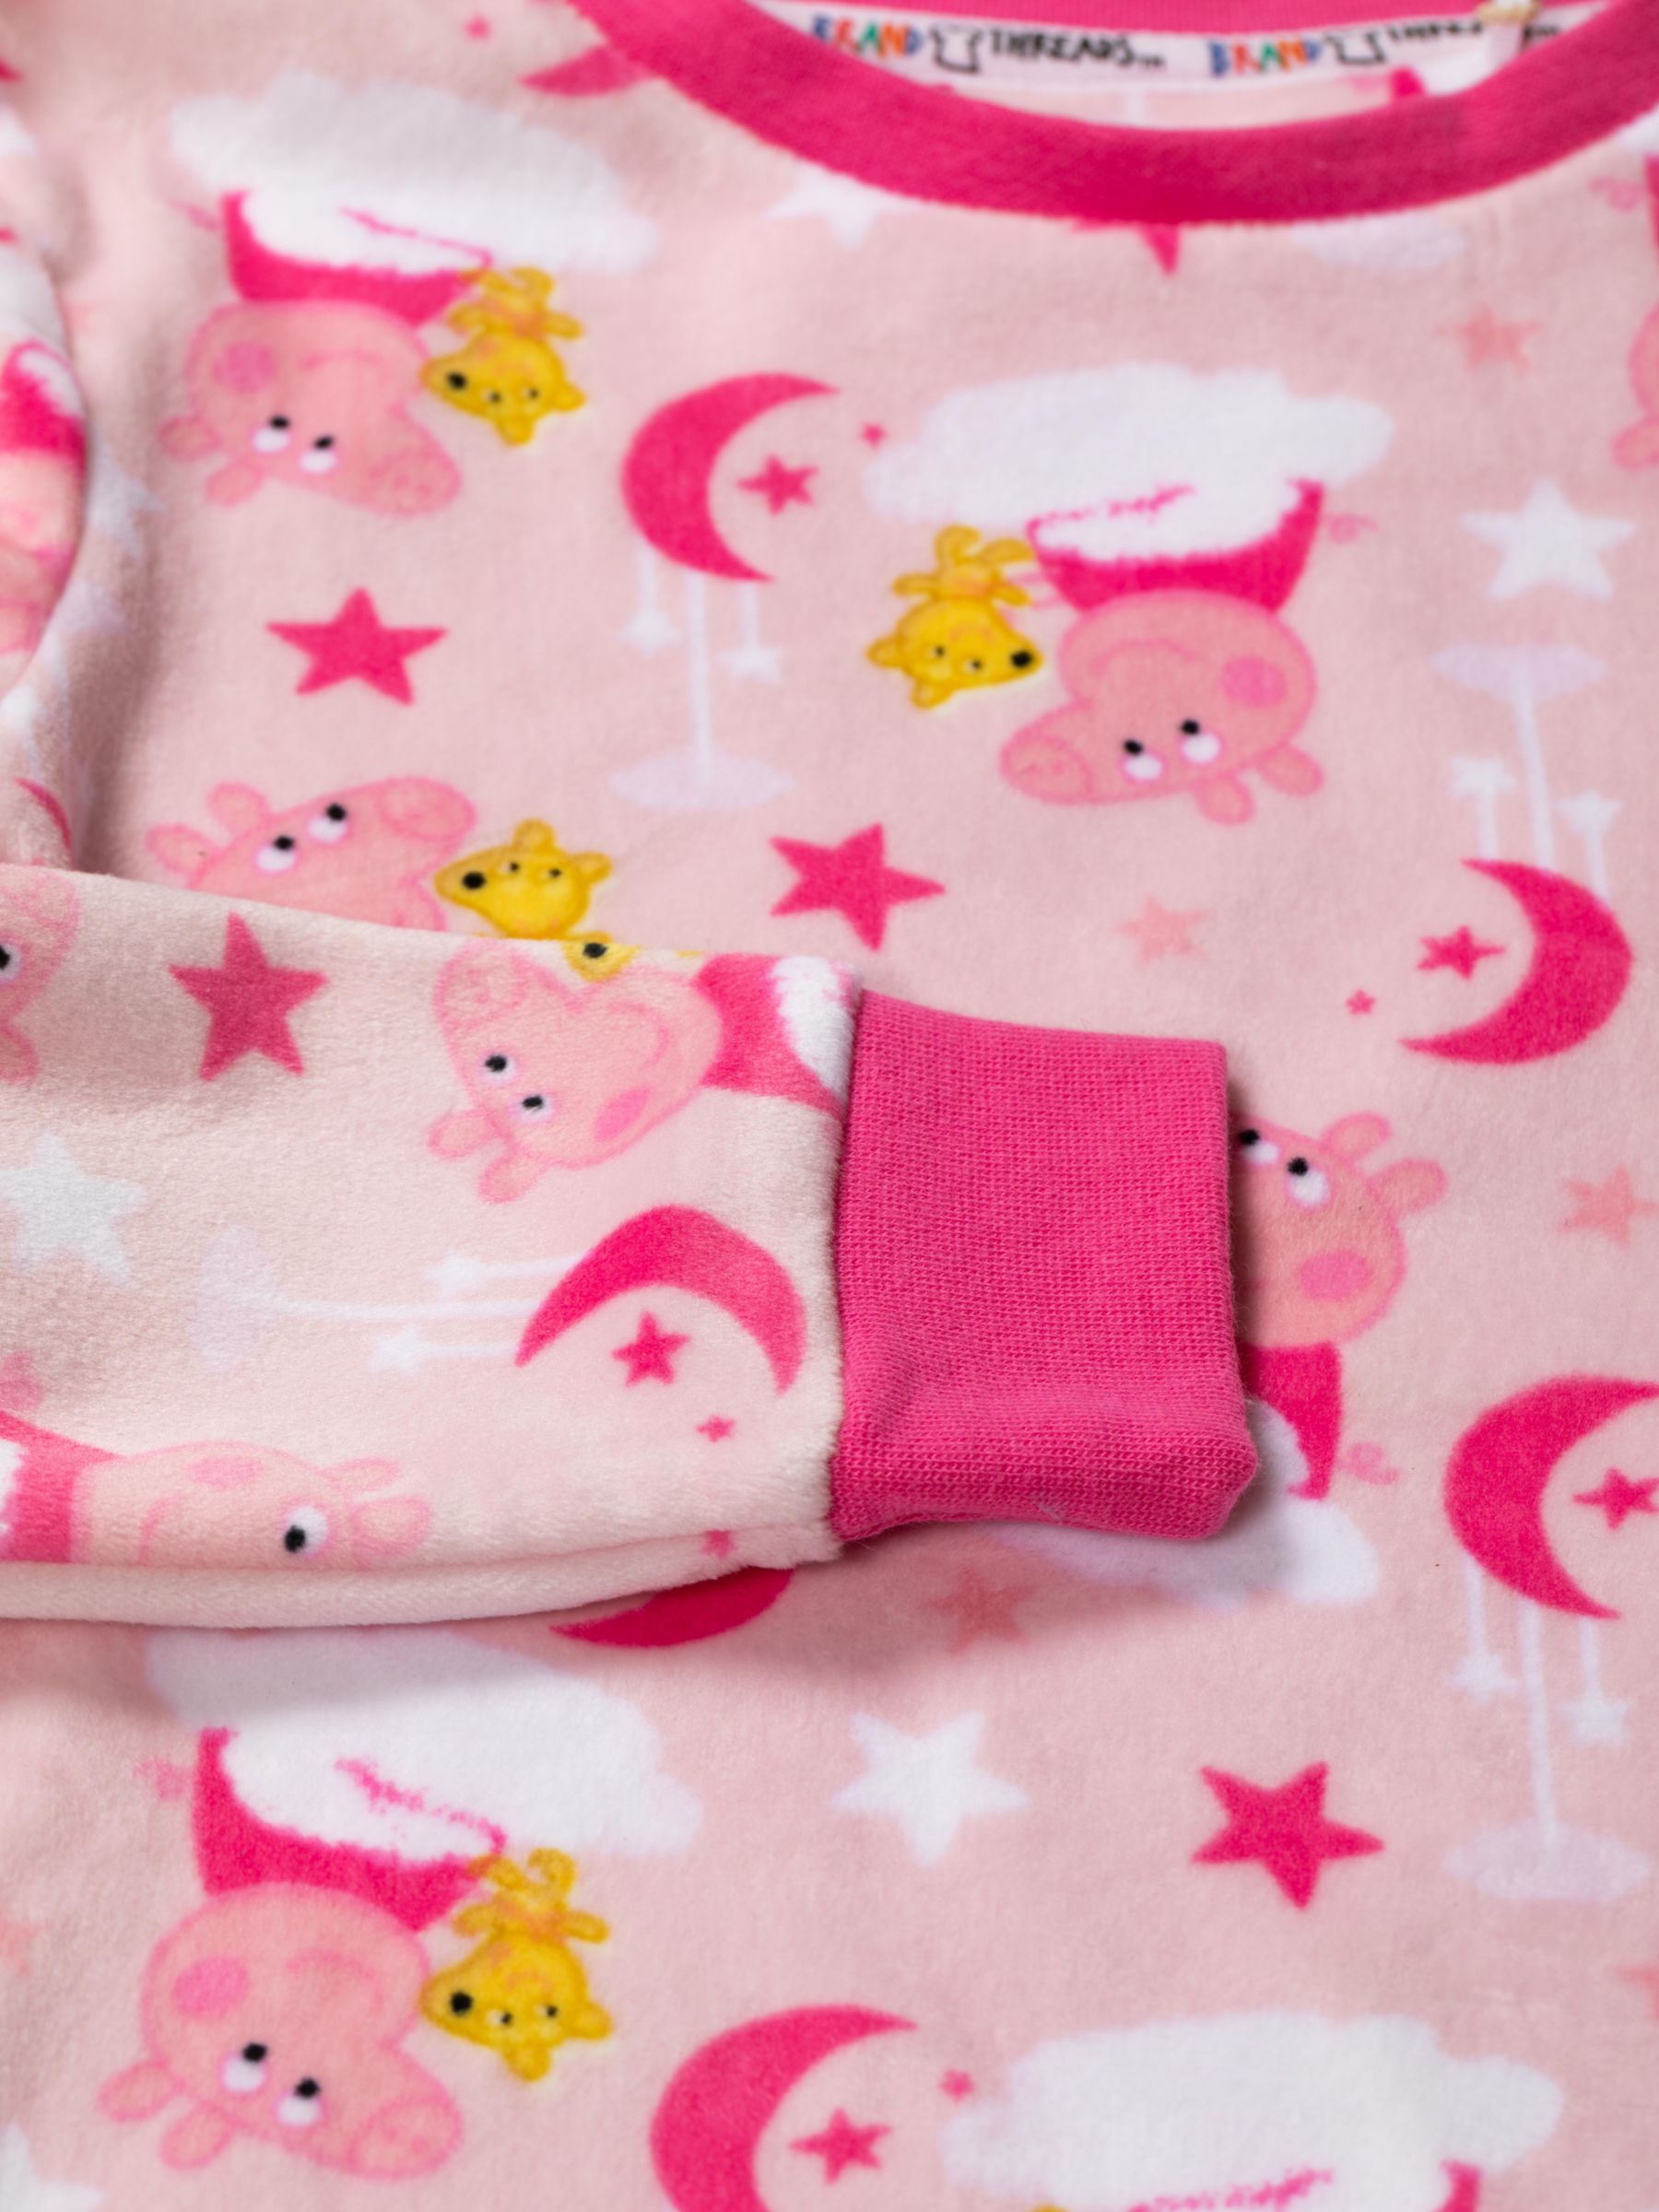 Brand Threads Kids' Peppa Pig Fleece Pyjamas Set, Pink, 12-18 months